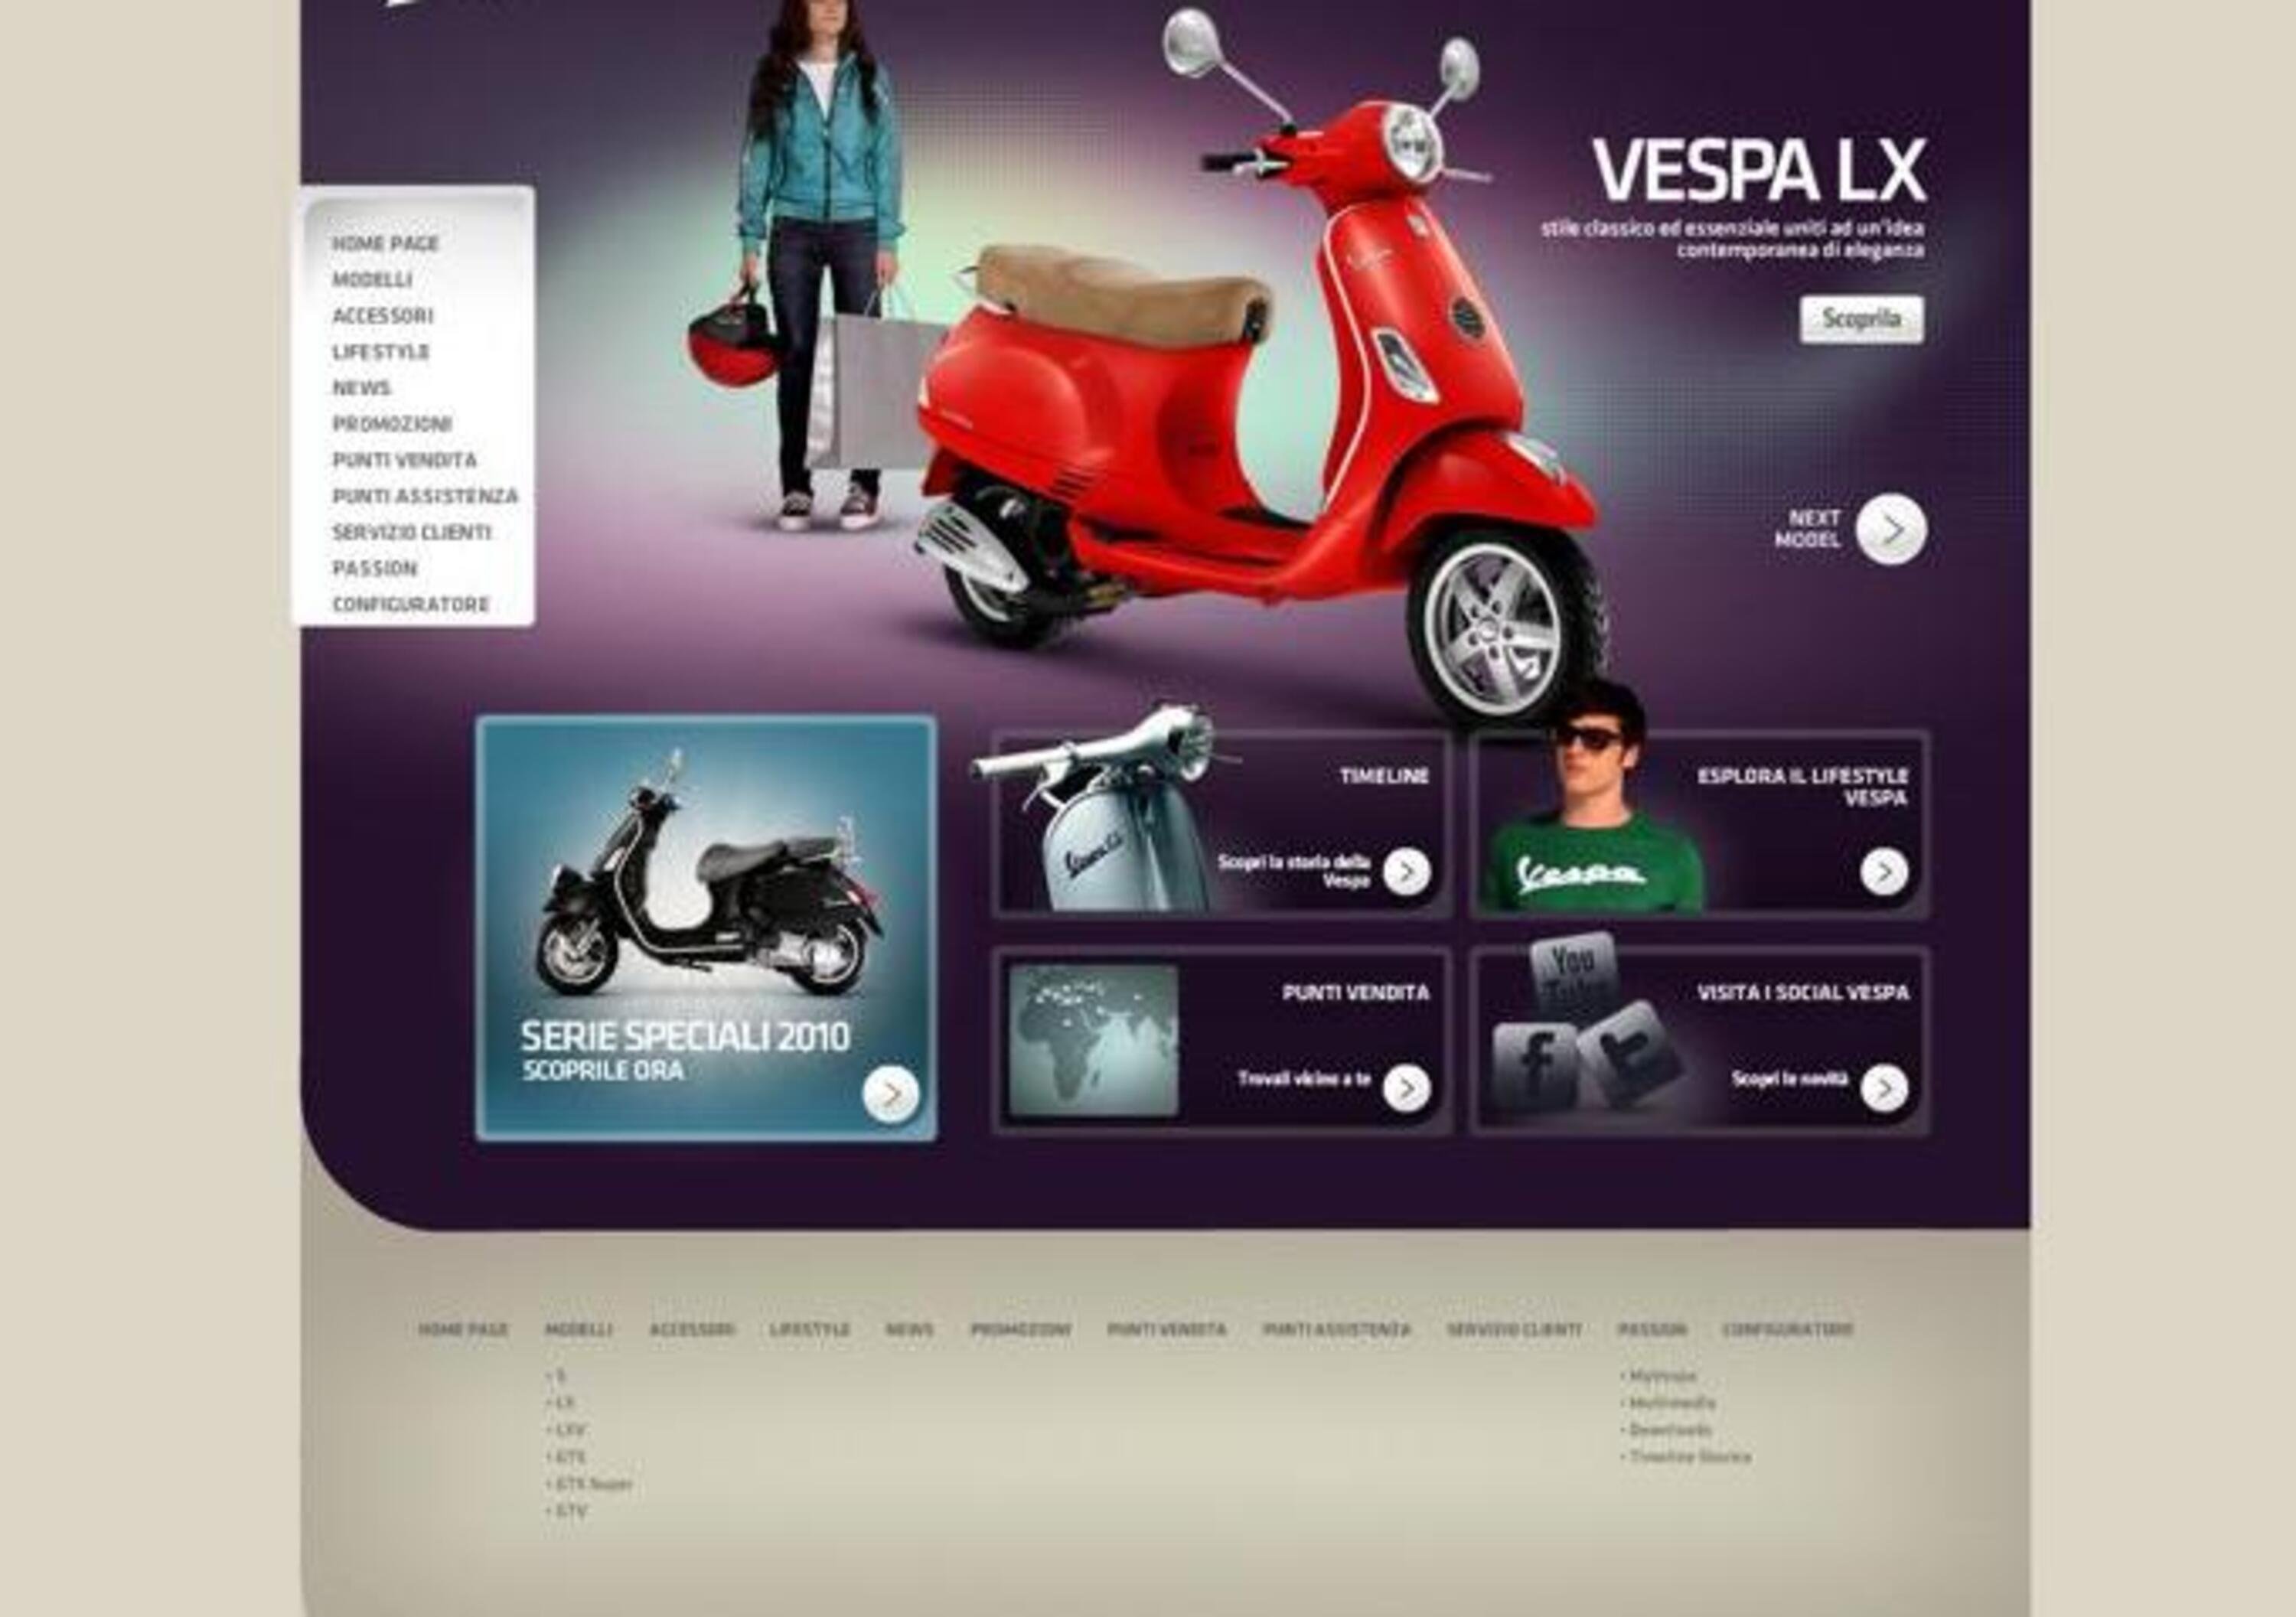 Vespa si aggiudica il Webby Awards 2011